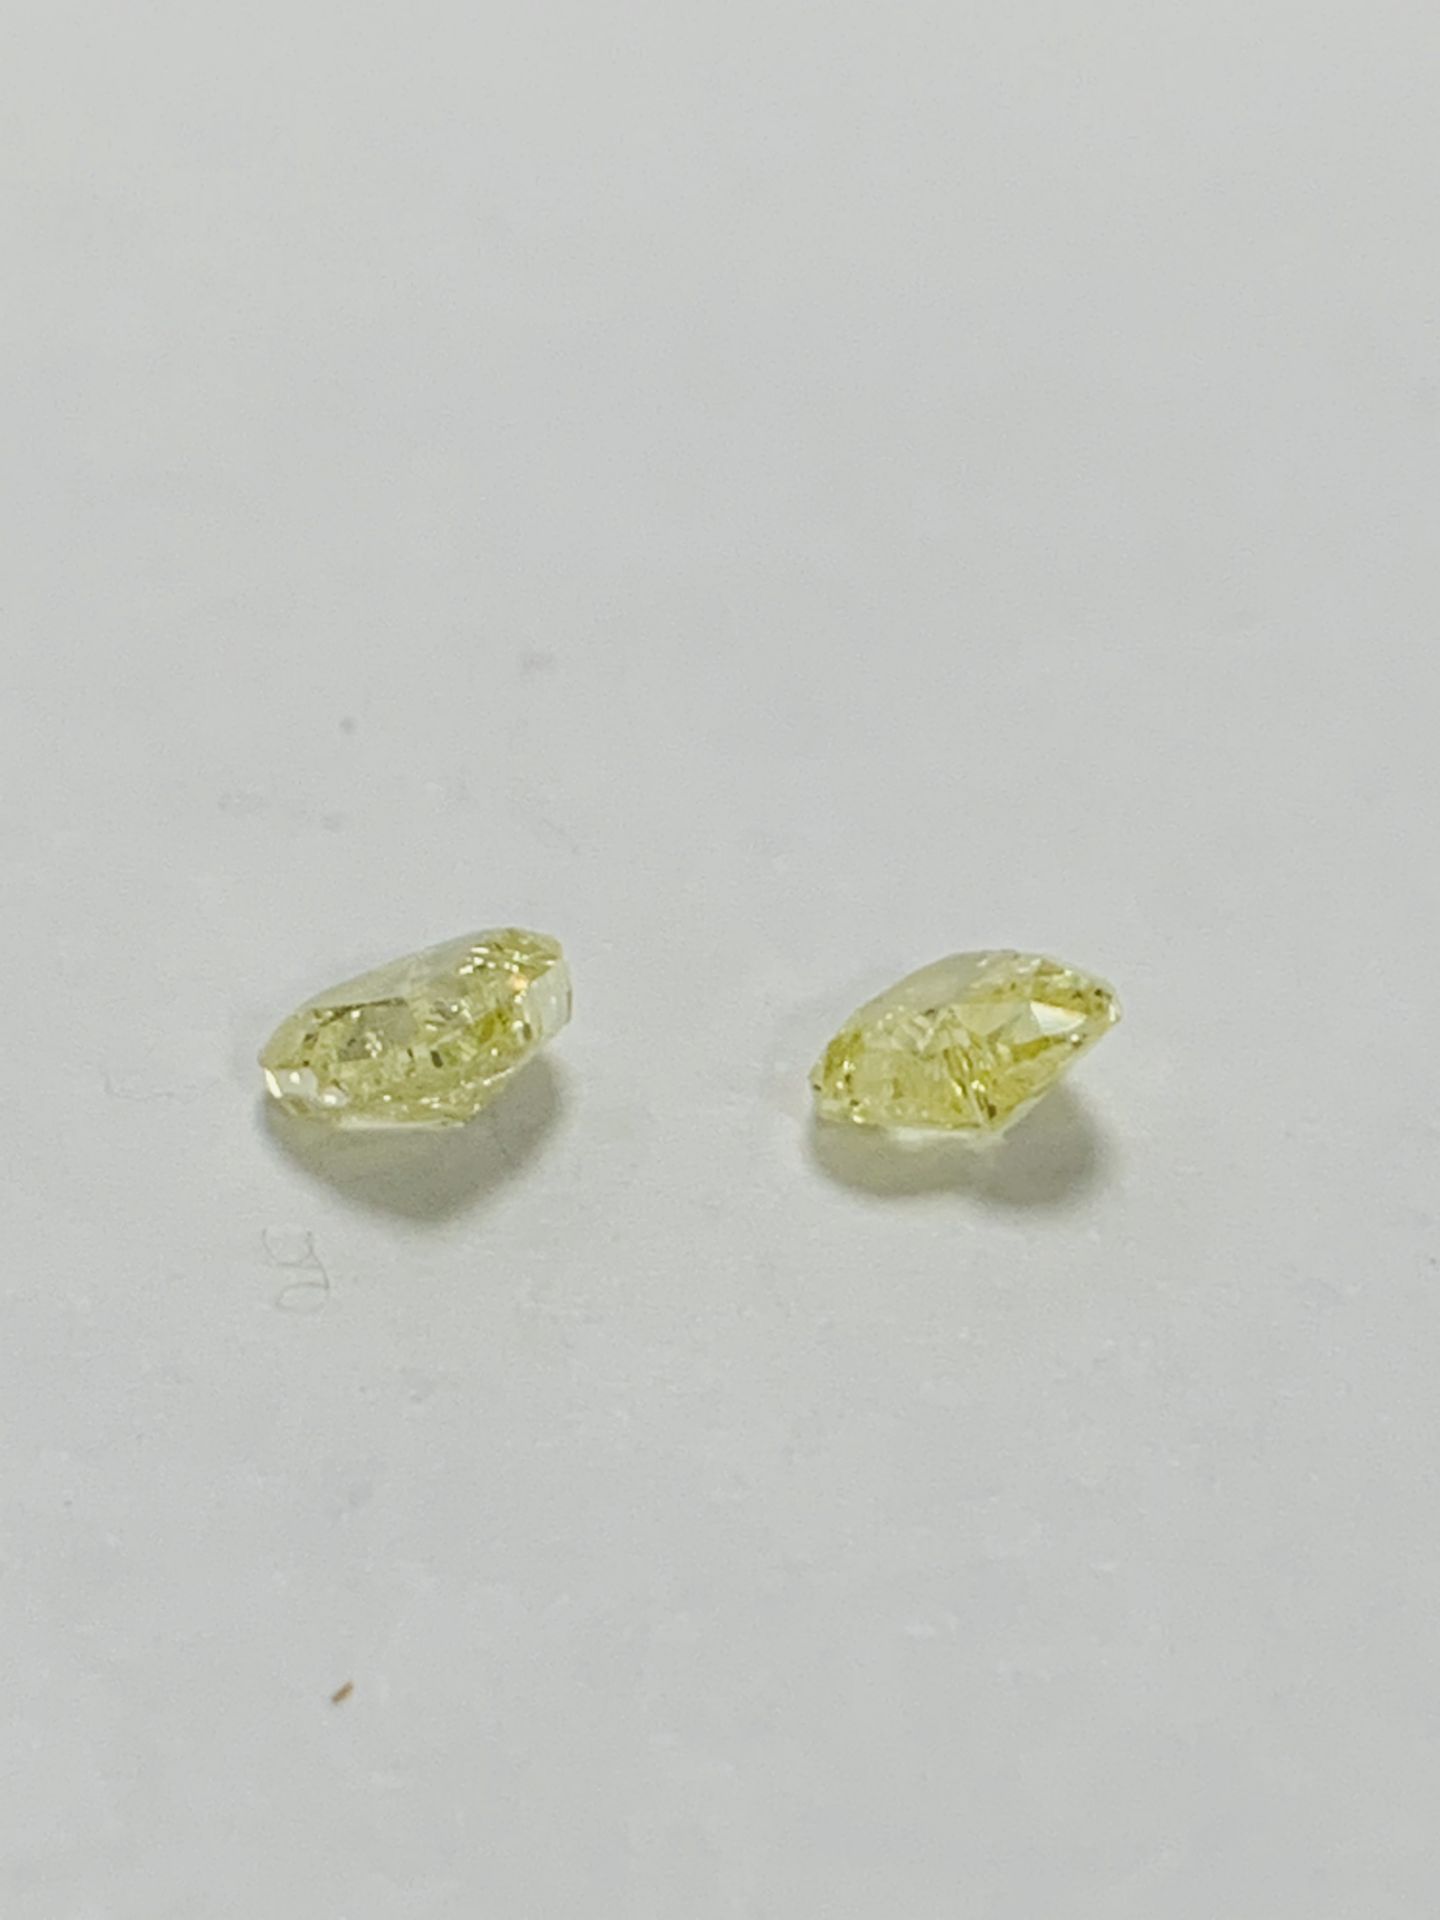 1ct pair Natural Yellow heart shape Diamonds - Image 2 of 2